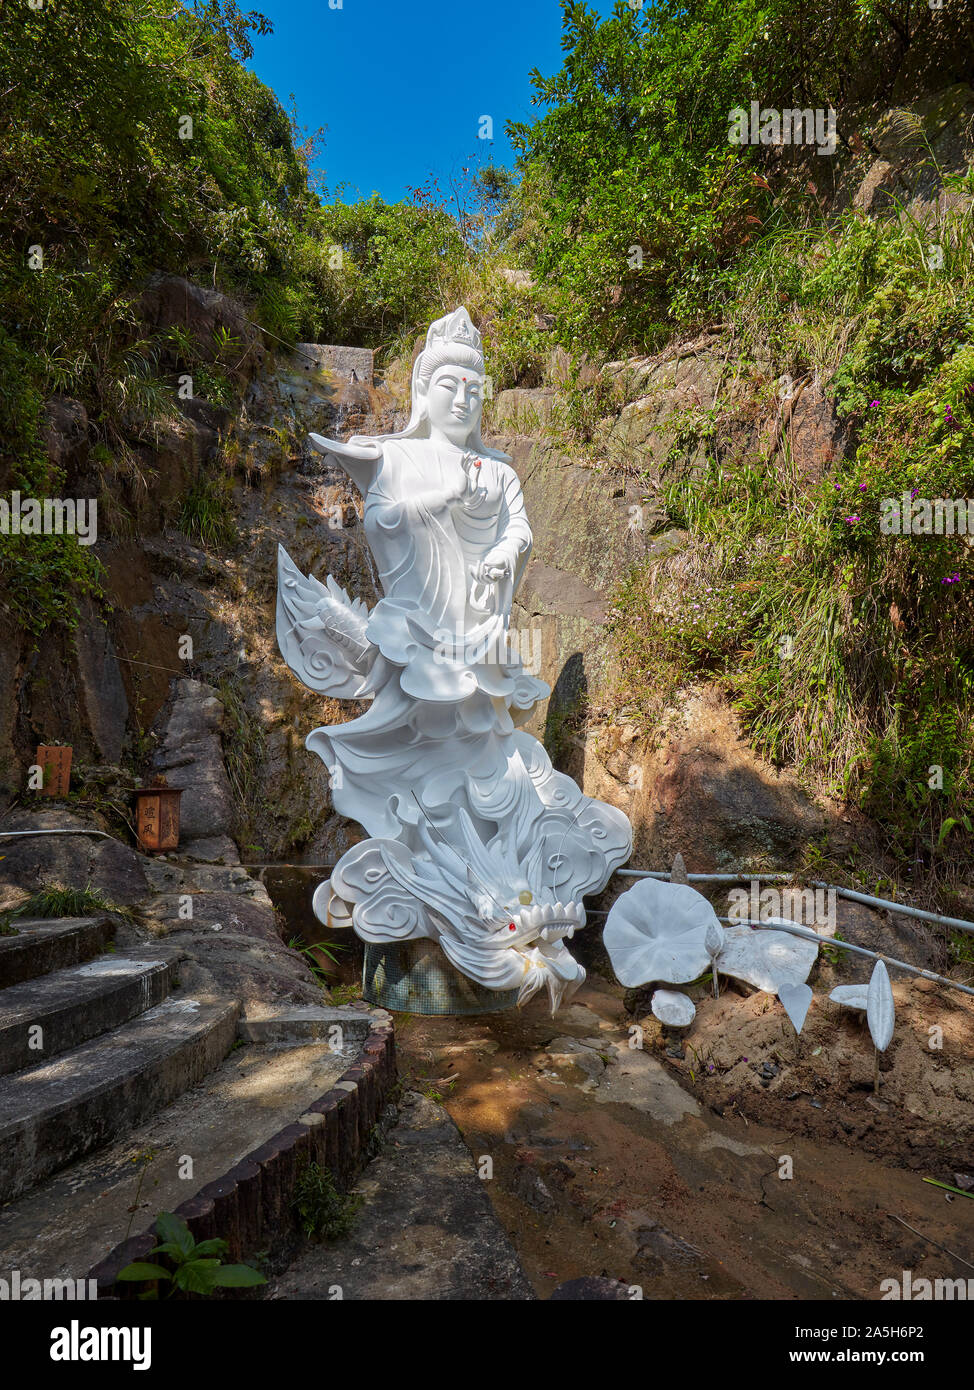 Statue of Kwun Yam, the Goddess of Mercy, at Sprinkler Guanyin. Ten Thousand Buddhas Monastery (Man Fat Sze), Sha Tin, New Territories, Hong Kong. Stock Photo